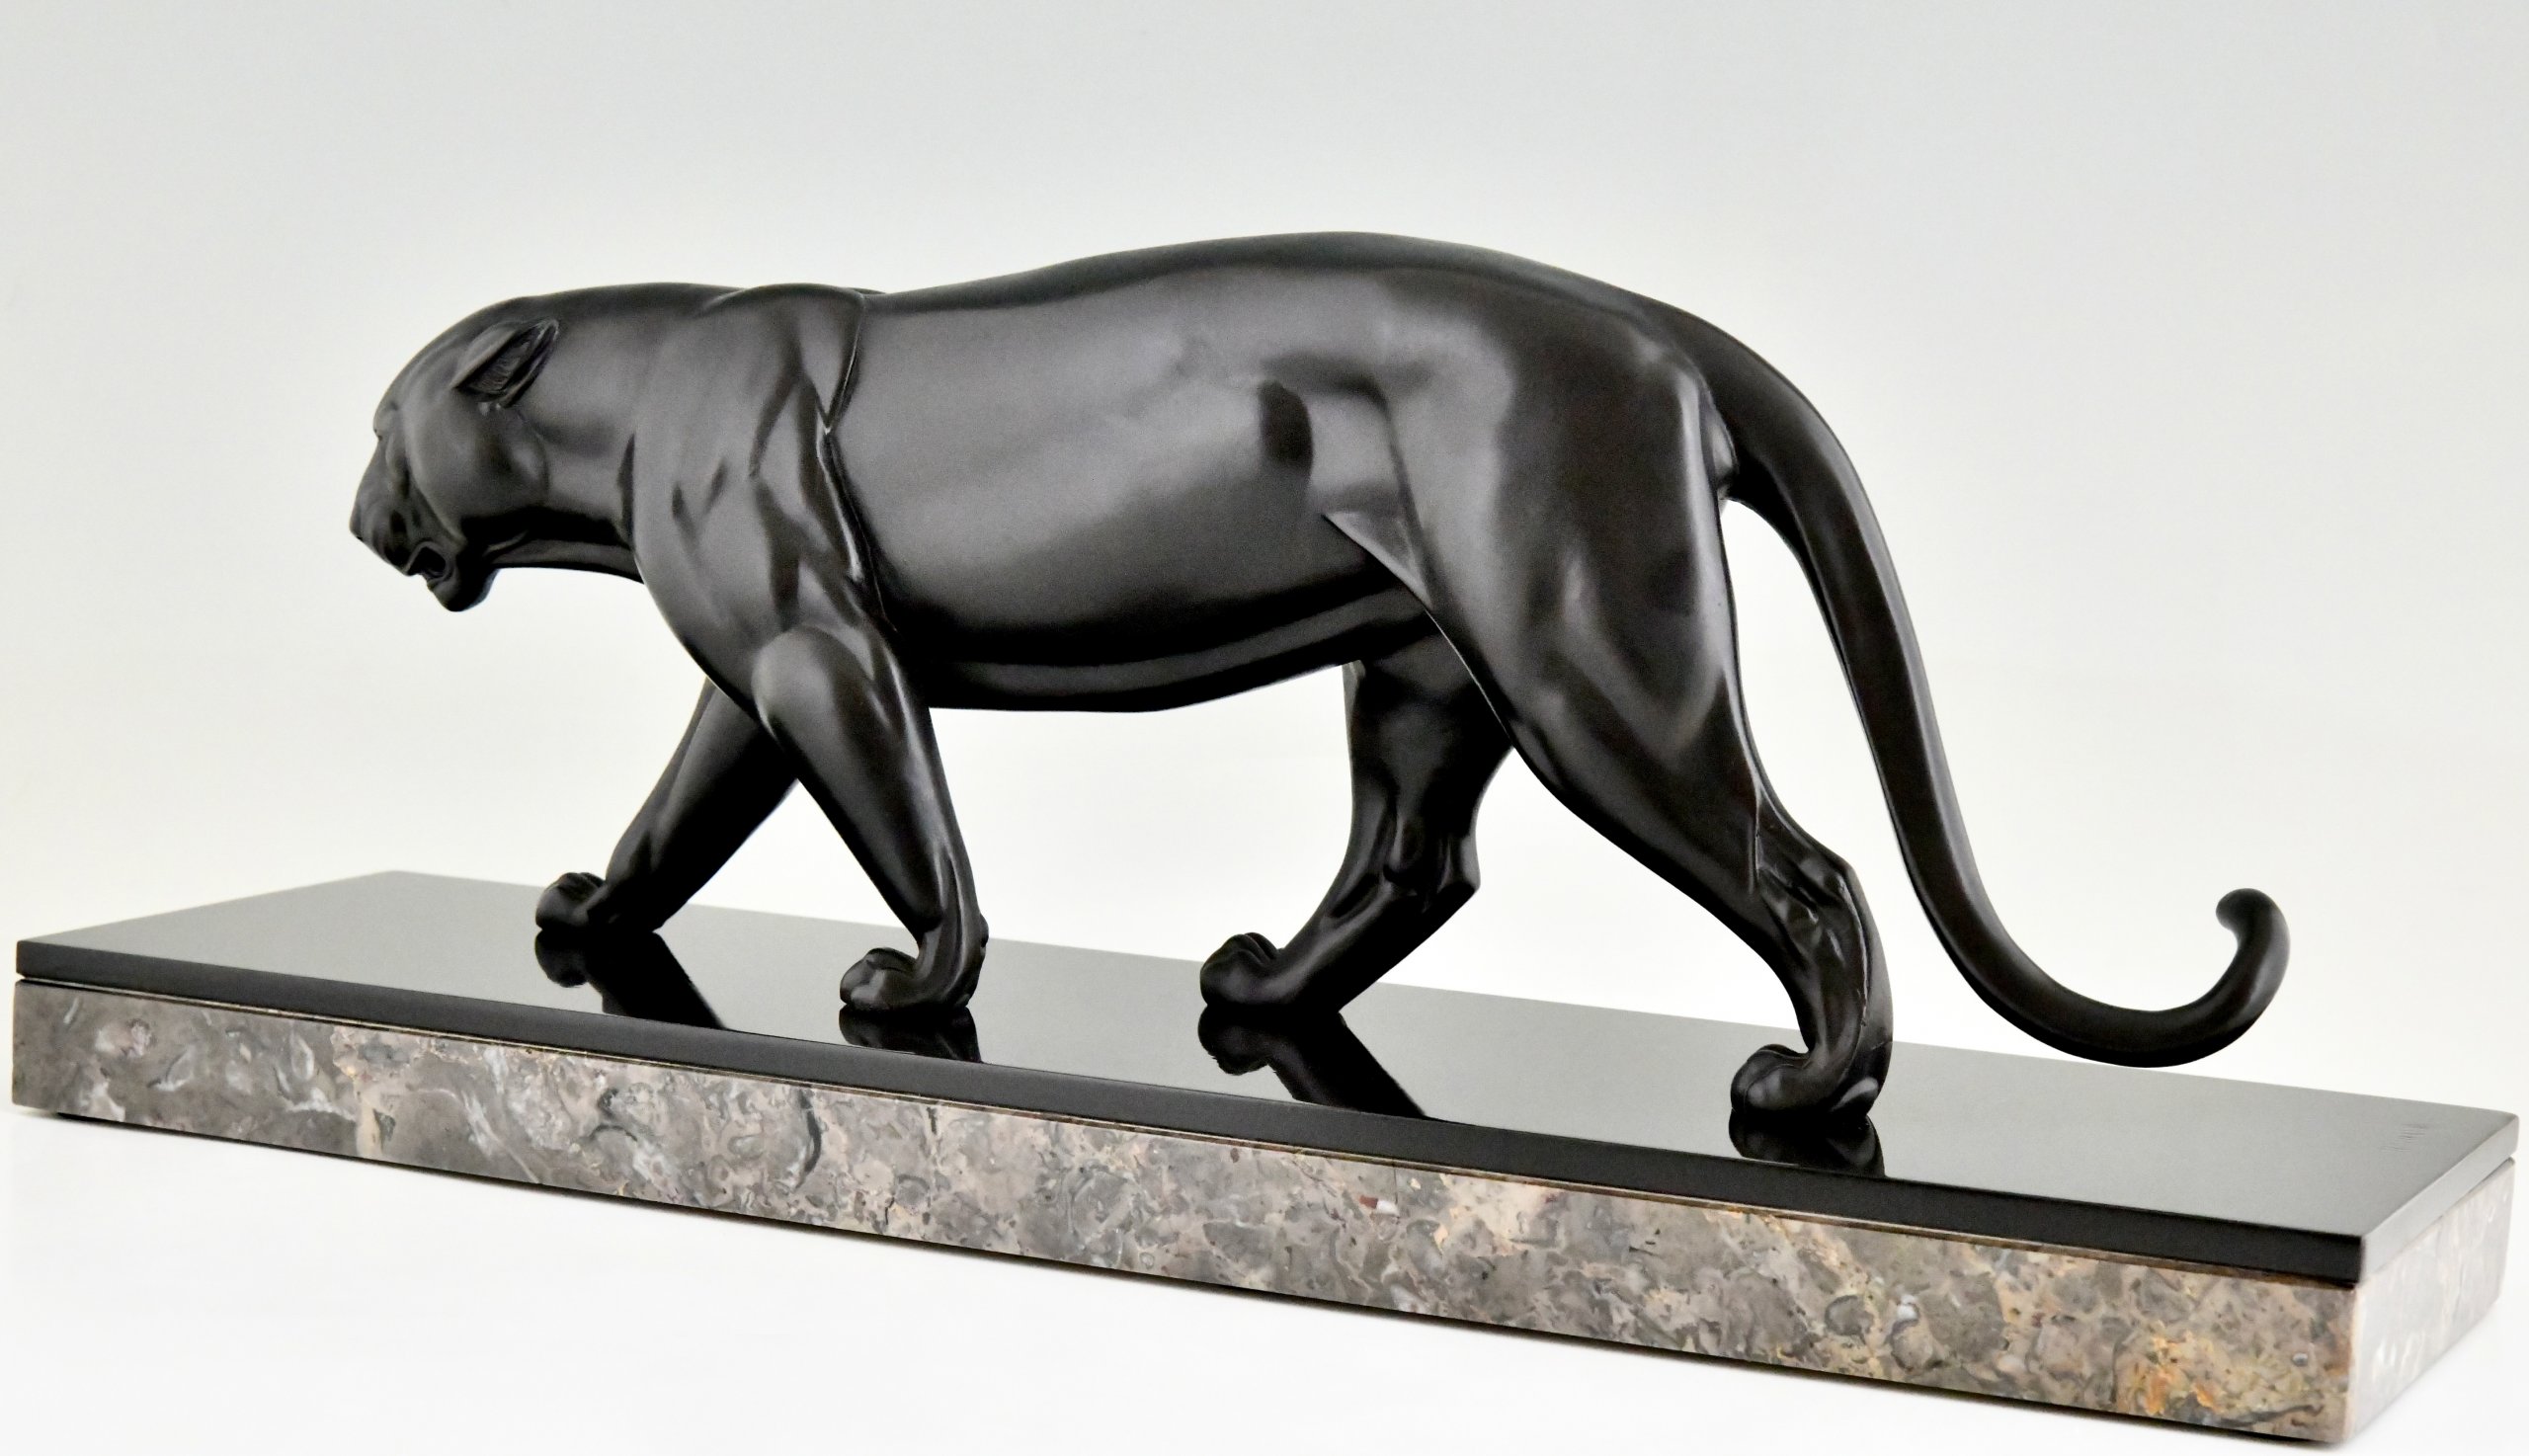 Art Deco Skulptur eines Panthers